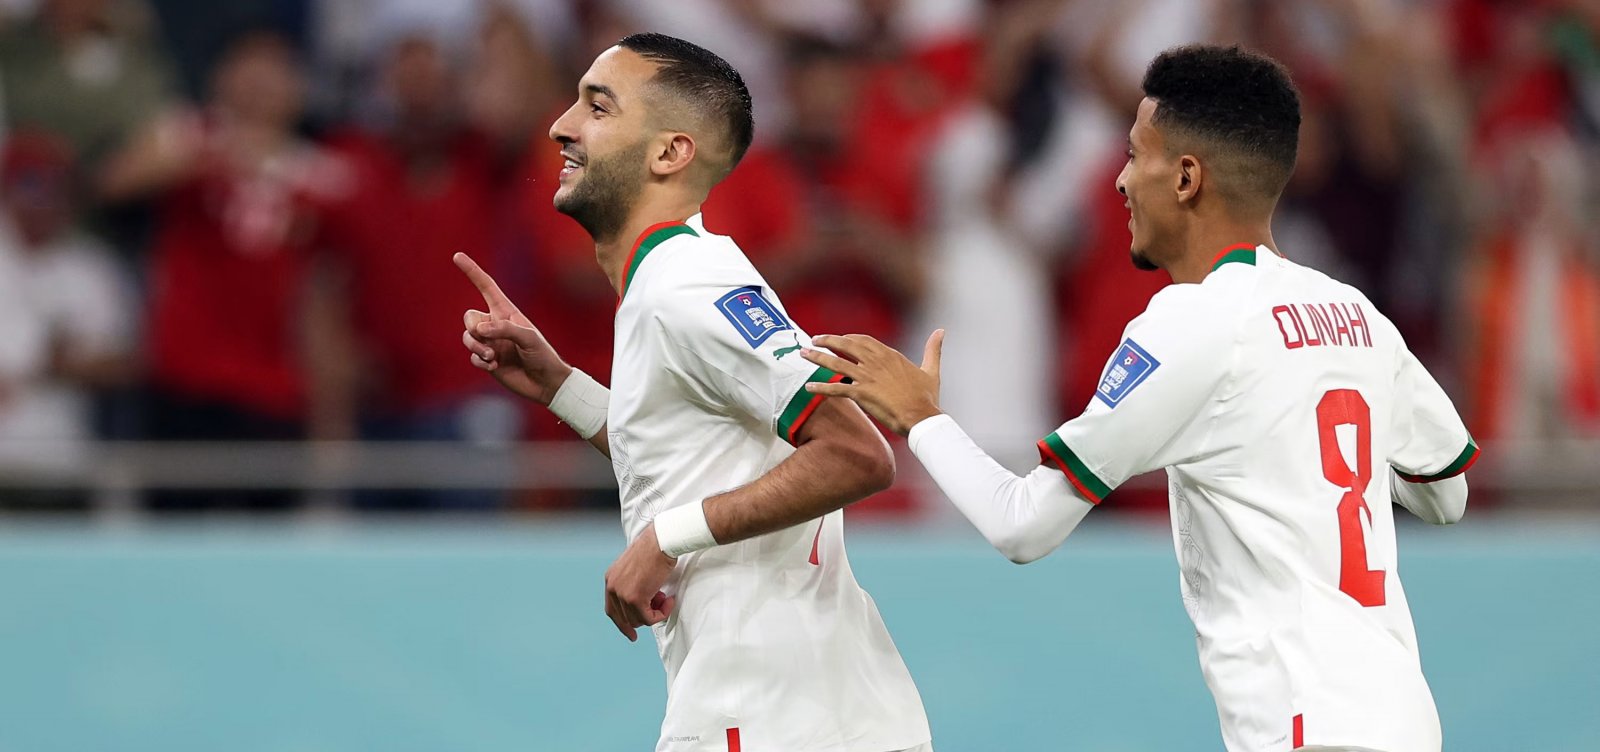 Marrocos derrota Canadá por 2 a 1 e se classifica para as oitavas de final